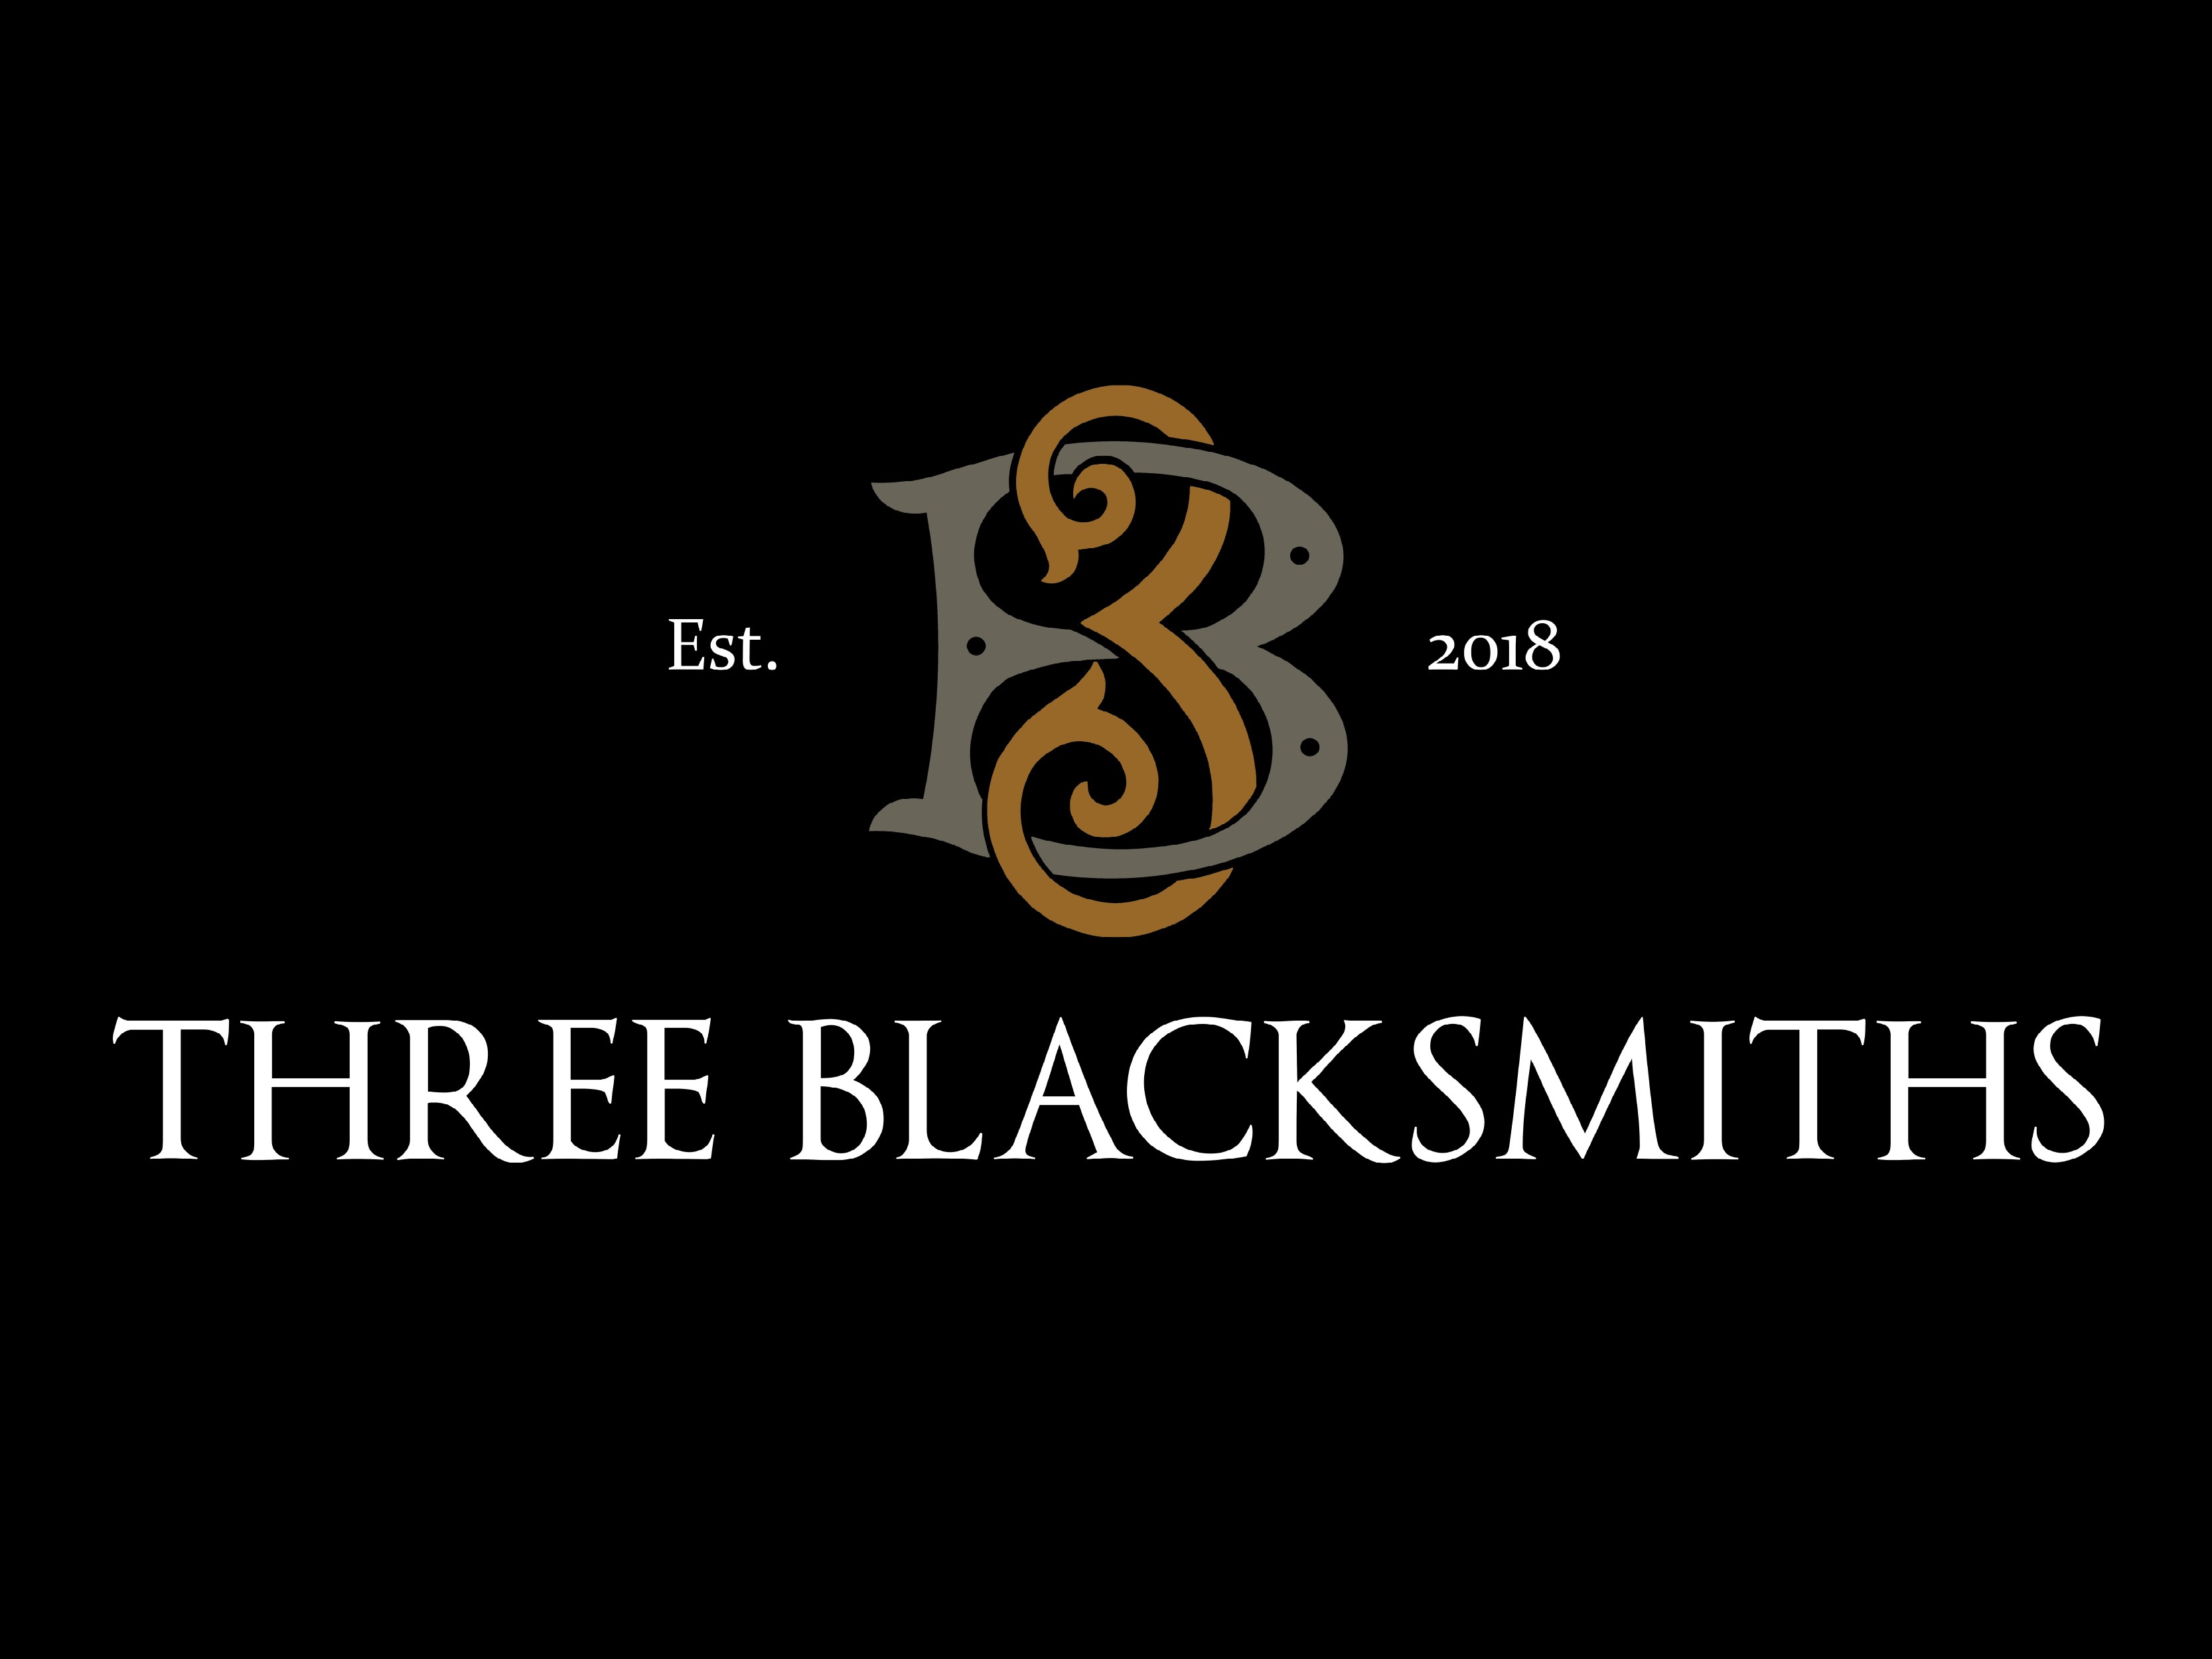 Three Blacksmiths